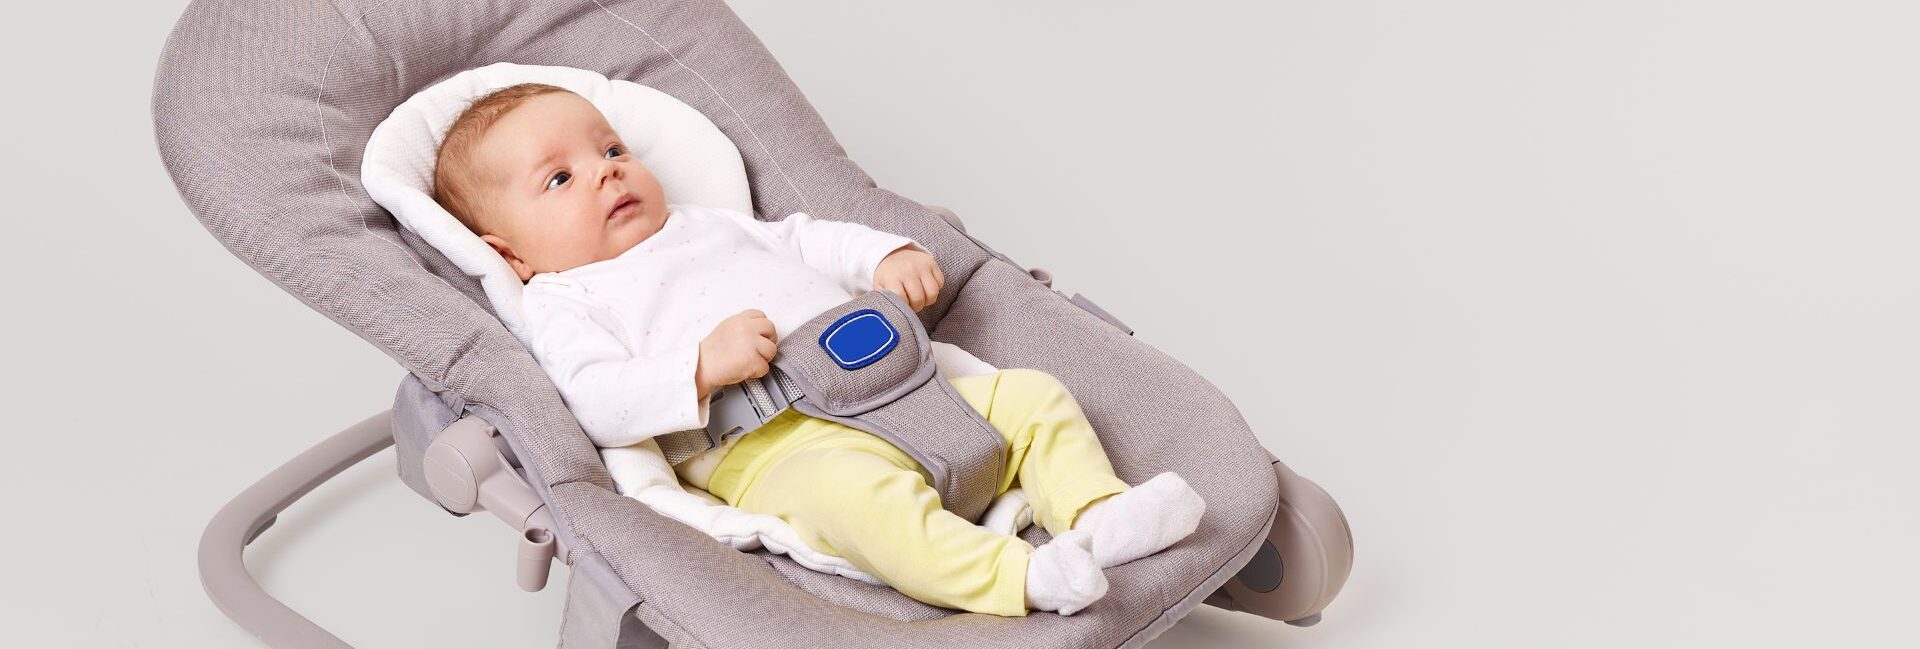 Cadeira de descanso para bebê